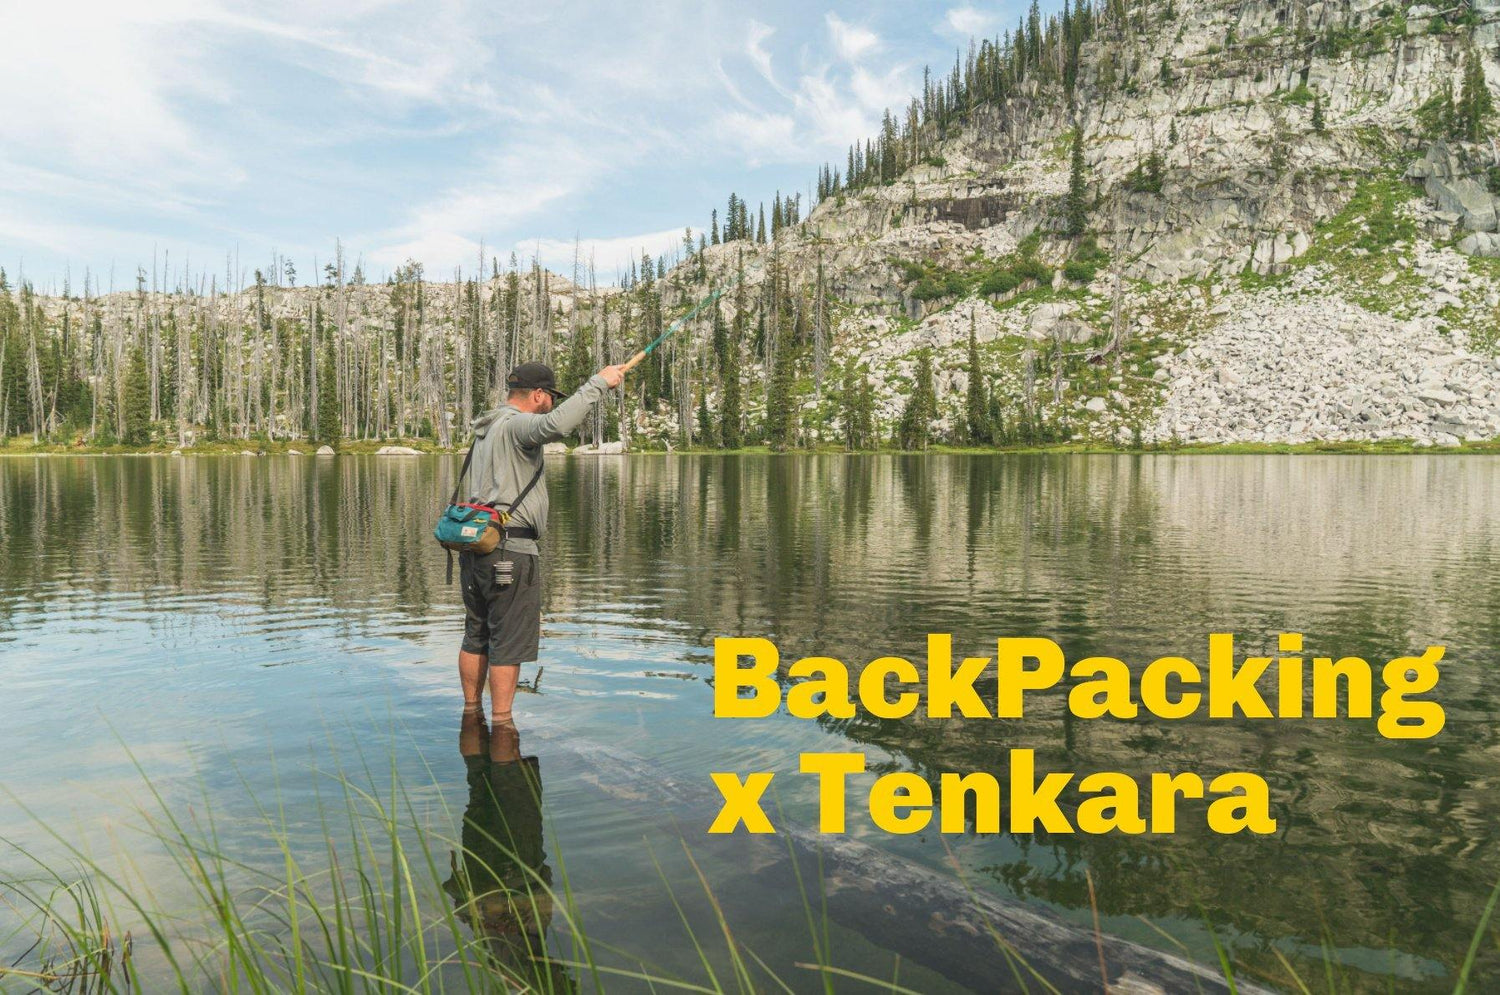 Backpacking and Tenkara Fishing